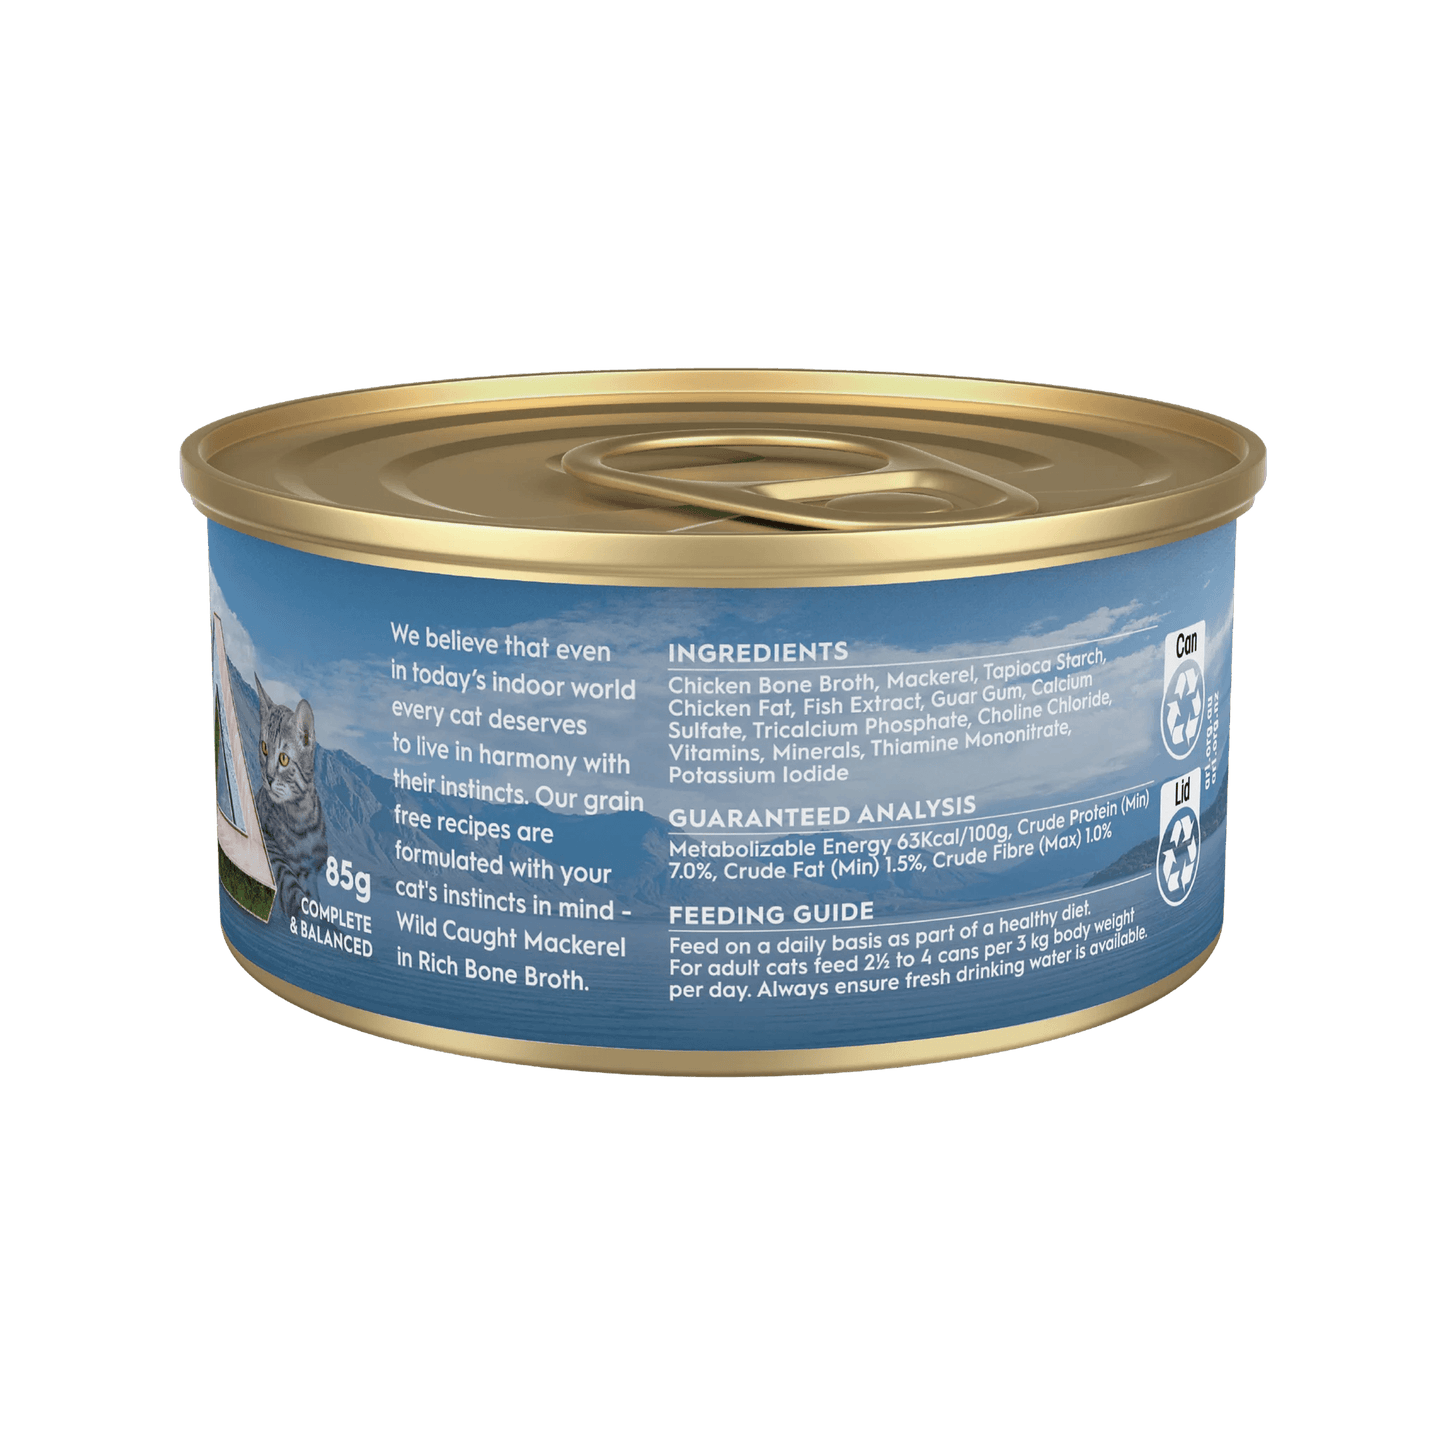 Trilogy Wet Adult Cat Food Mackarel in Bone Broth 85g - Woonona Petfood & Produce